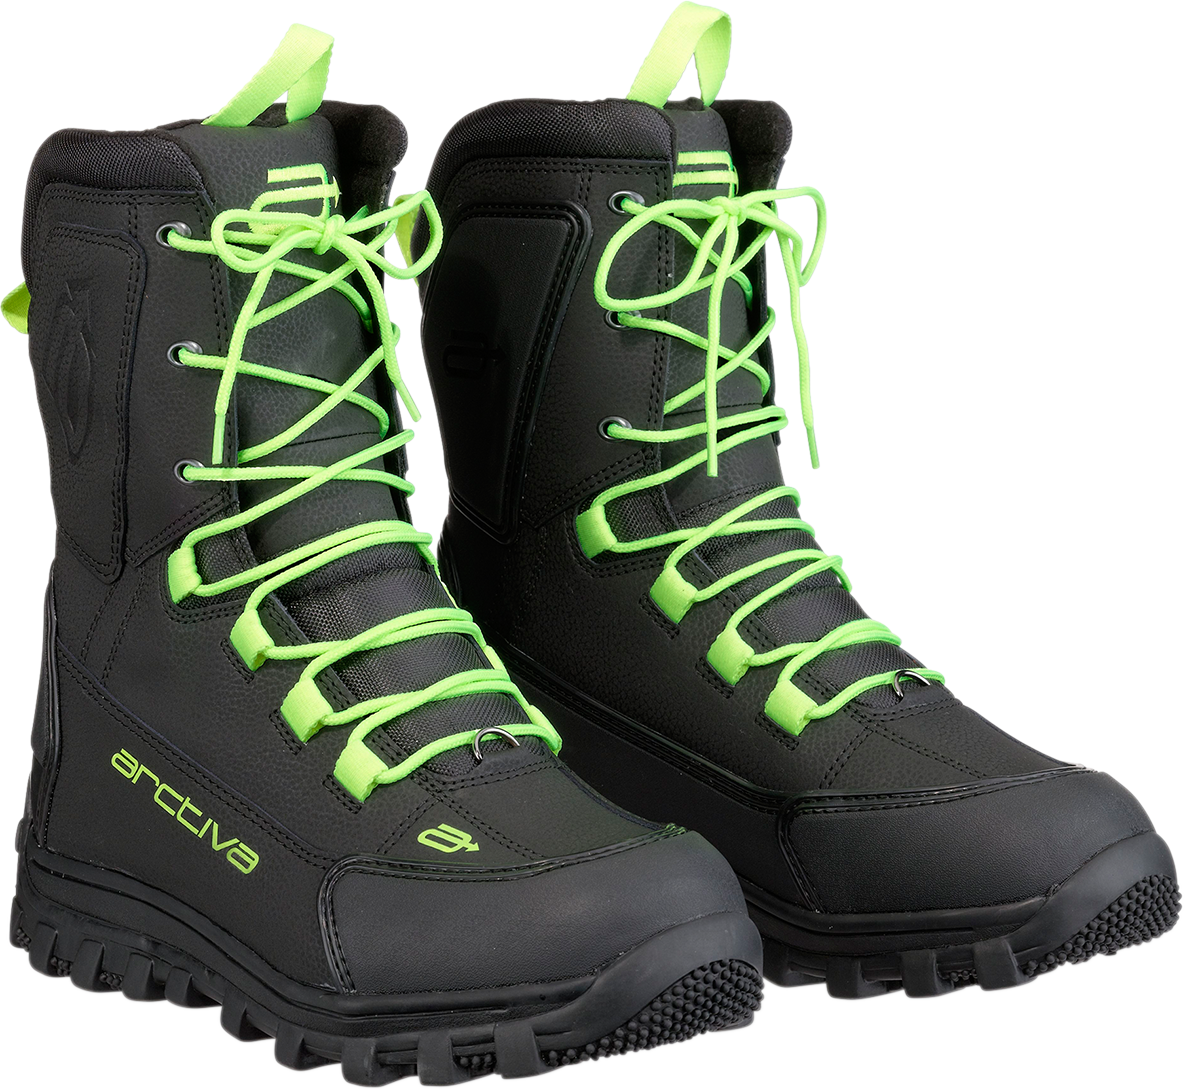 ARCTIVA Advance Boots - Black/Hi-Viz - Size 11 3420-0651